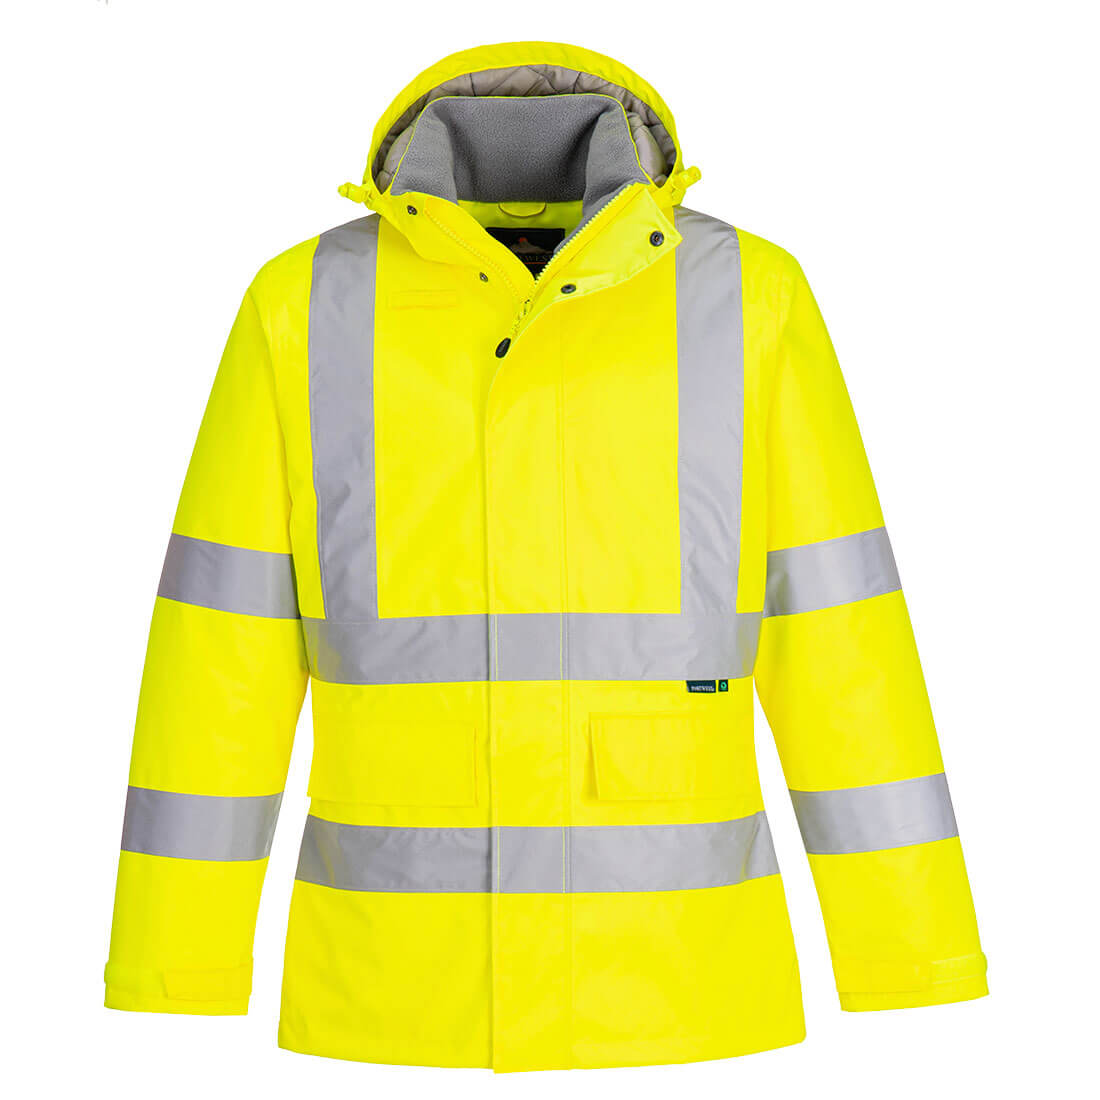 Portwest® Planet EC60 ECO Hi-Vis Yellow Bio-Based Winter Jackets, Class 3 